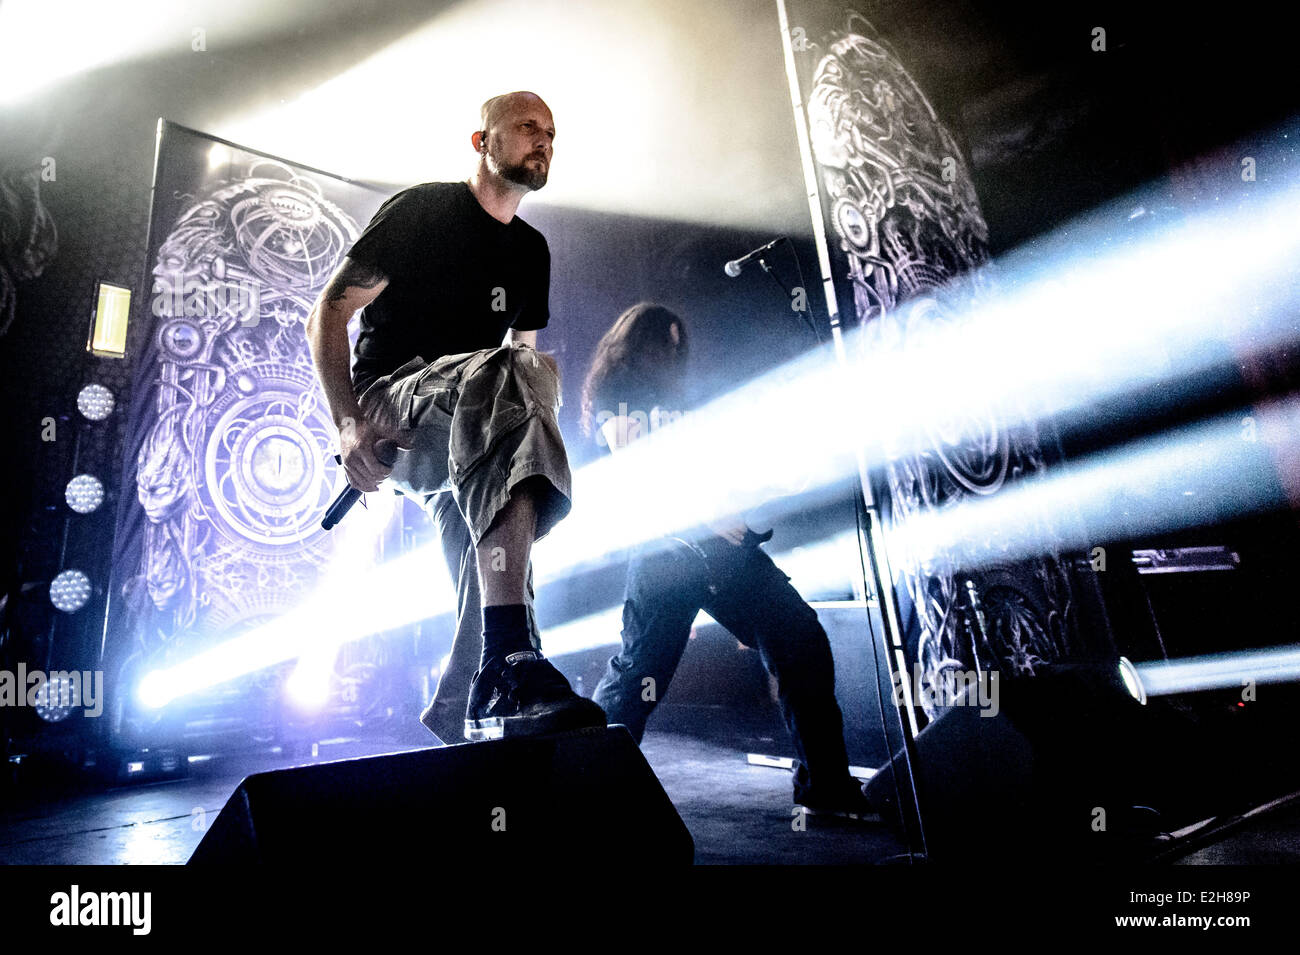 Toronto, Ontario, Canada. 19 Juin, 2014. JENS KIDMAN chanteur du groupe de metal suédois de 'Meshuggah' effectue live sound Academy. Crédit : Igor/Vidyashev ZUMAPRESS.com/Alamy Live News Banque D'Images